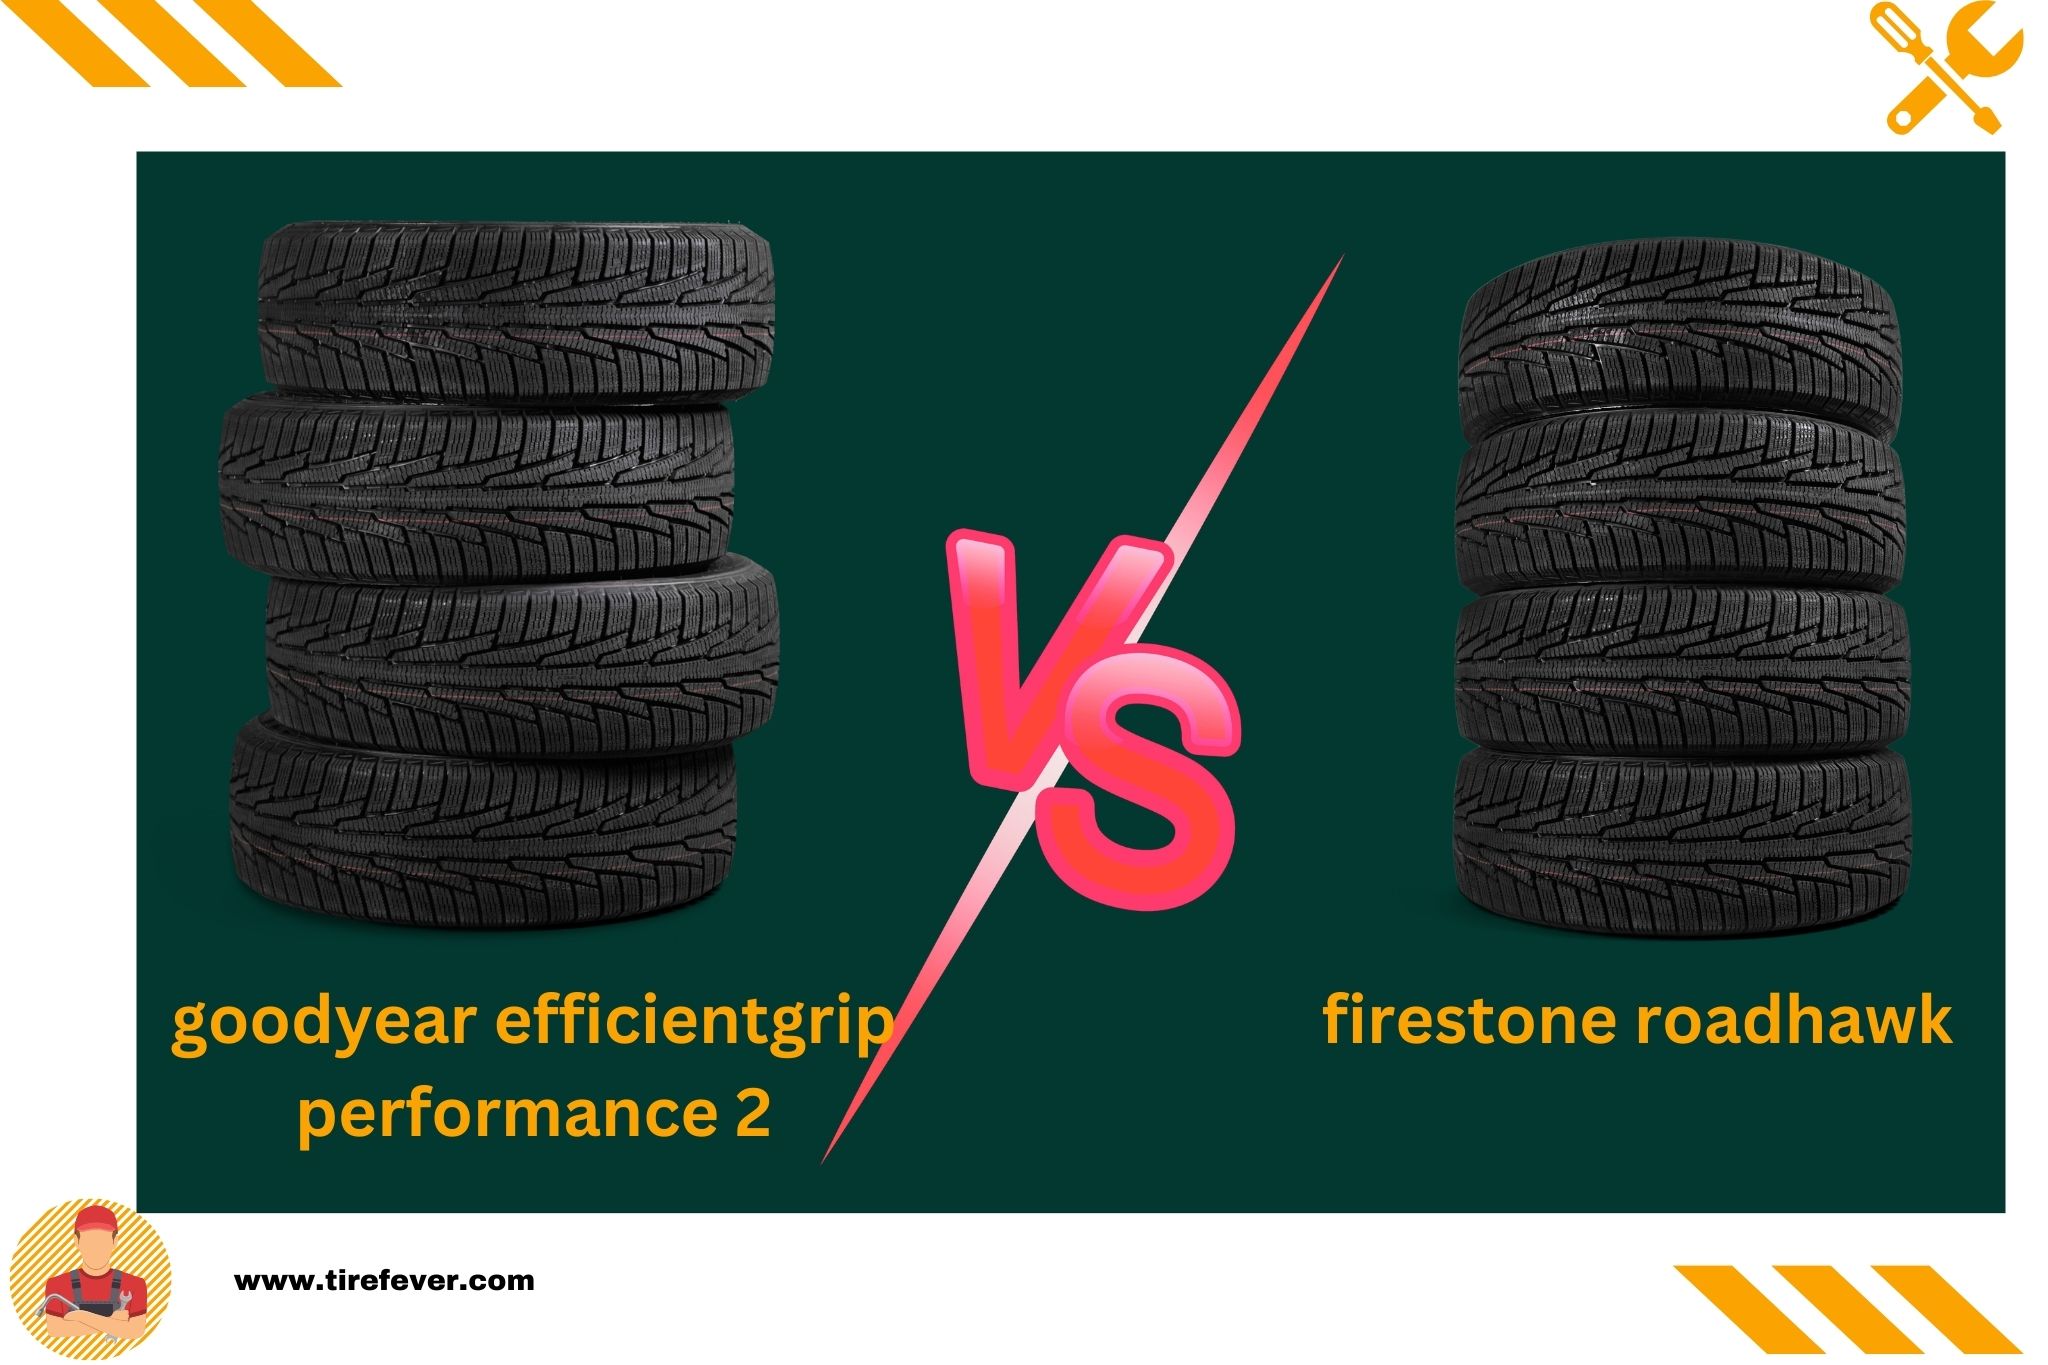 goodyear efficientgrip performance 2 vs firestone roadhawk